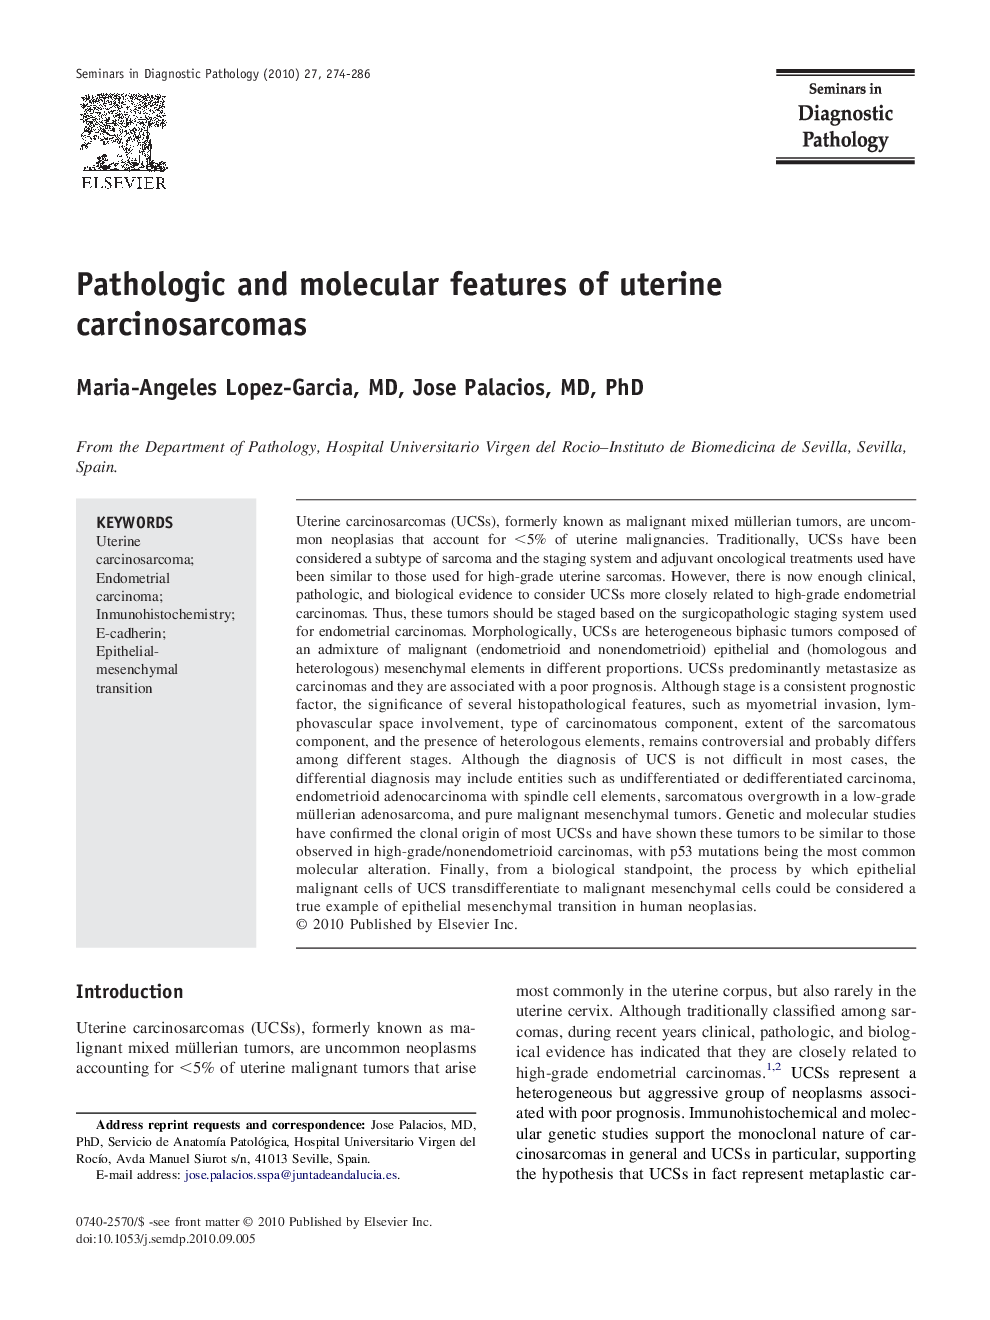 Pathologic and molecular features of uterine carcinosarcomas